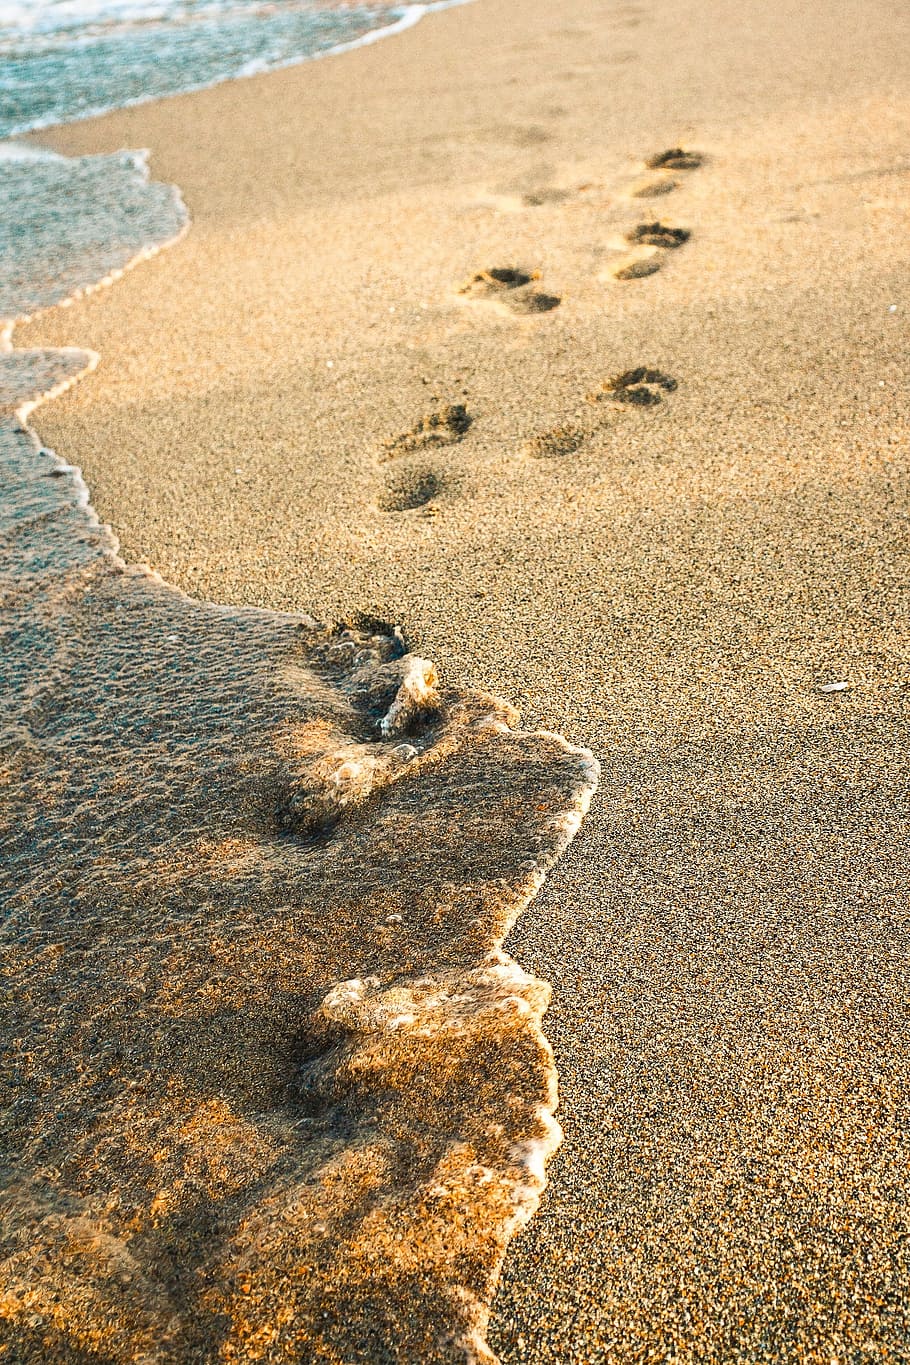 Sand, Great, Water, Seaside, great, water, summer, beach, footprint, nature, paw print